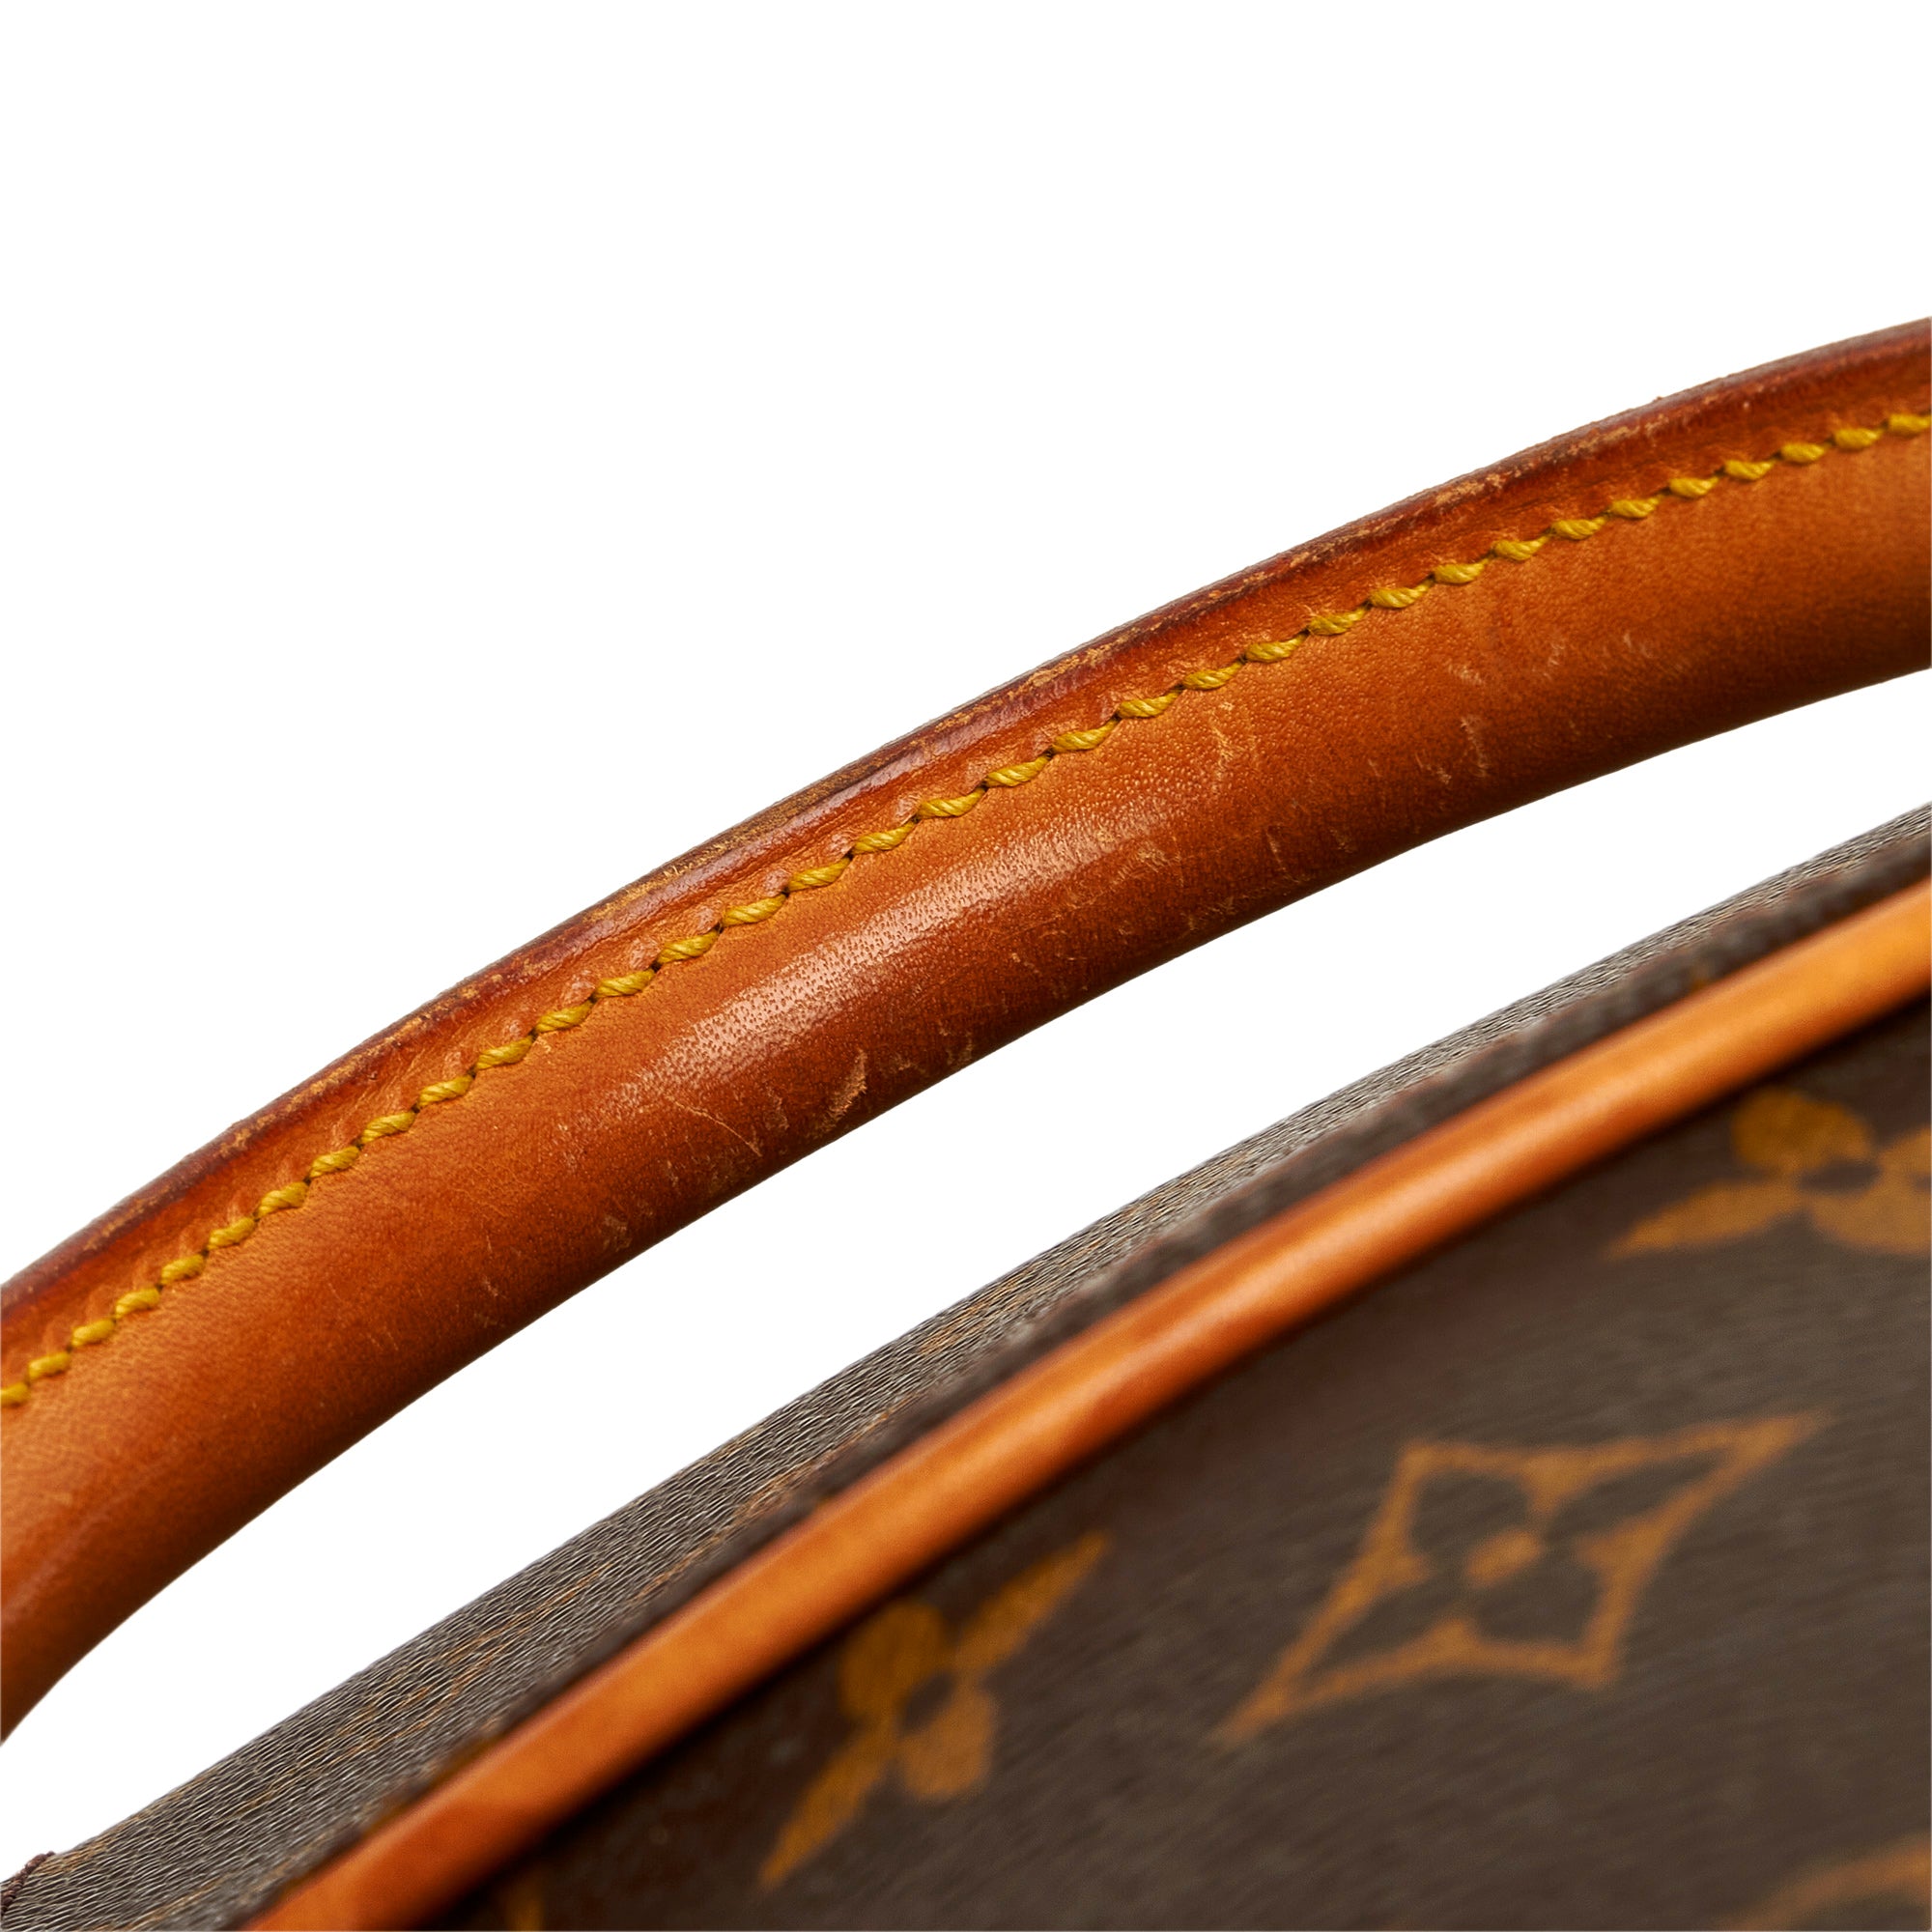 Brown Louis Vuitton Monogram Ellipse PM Handbag, RvceShops Revival